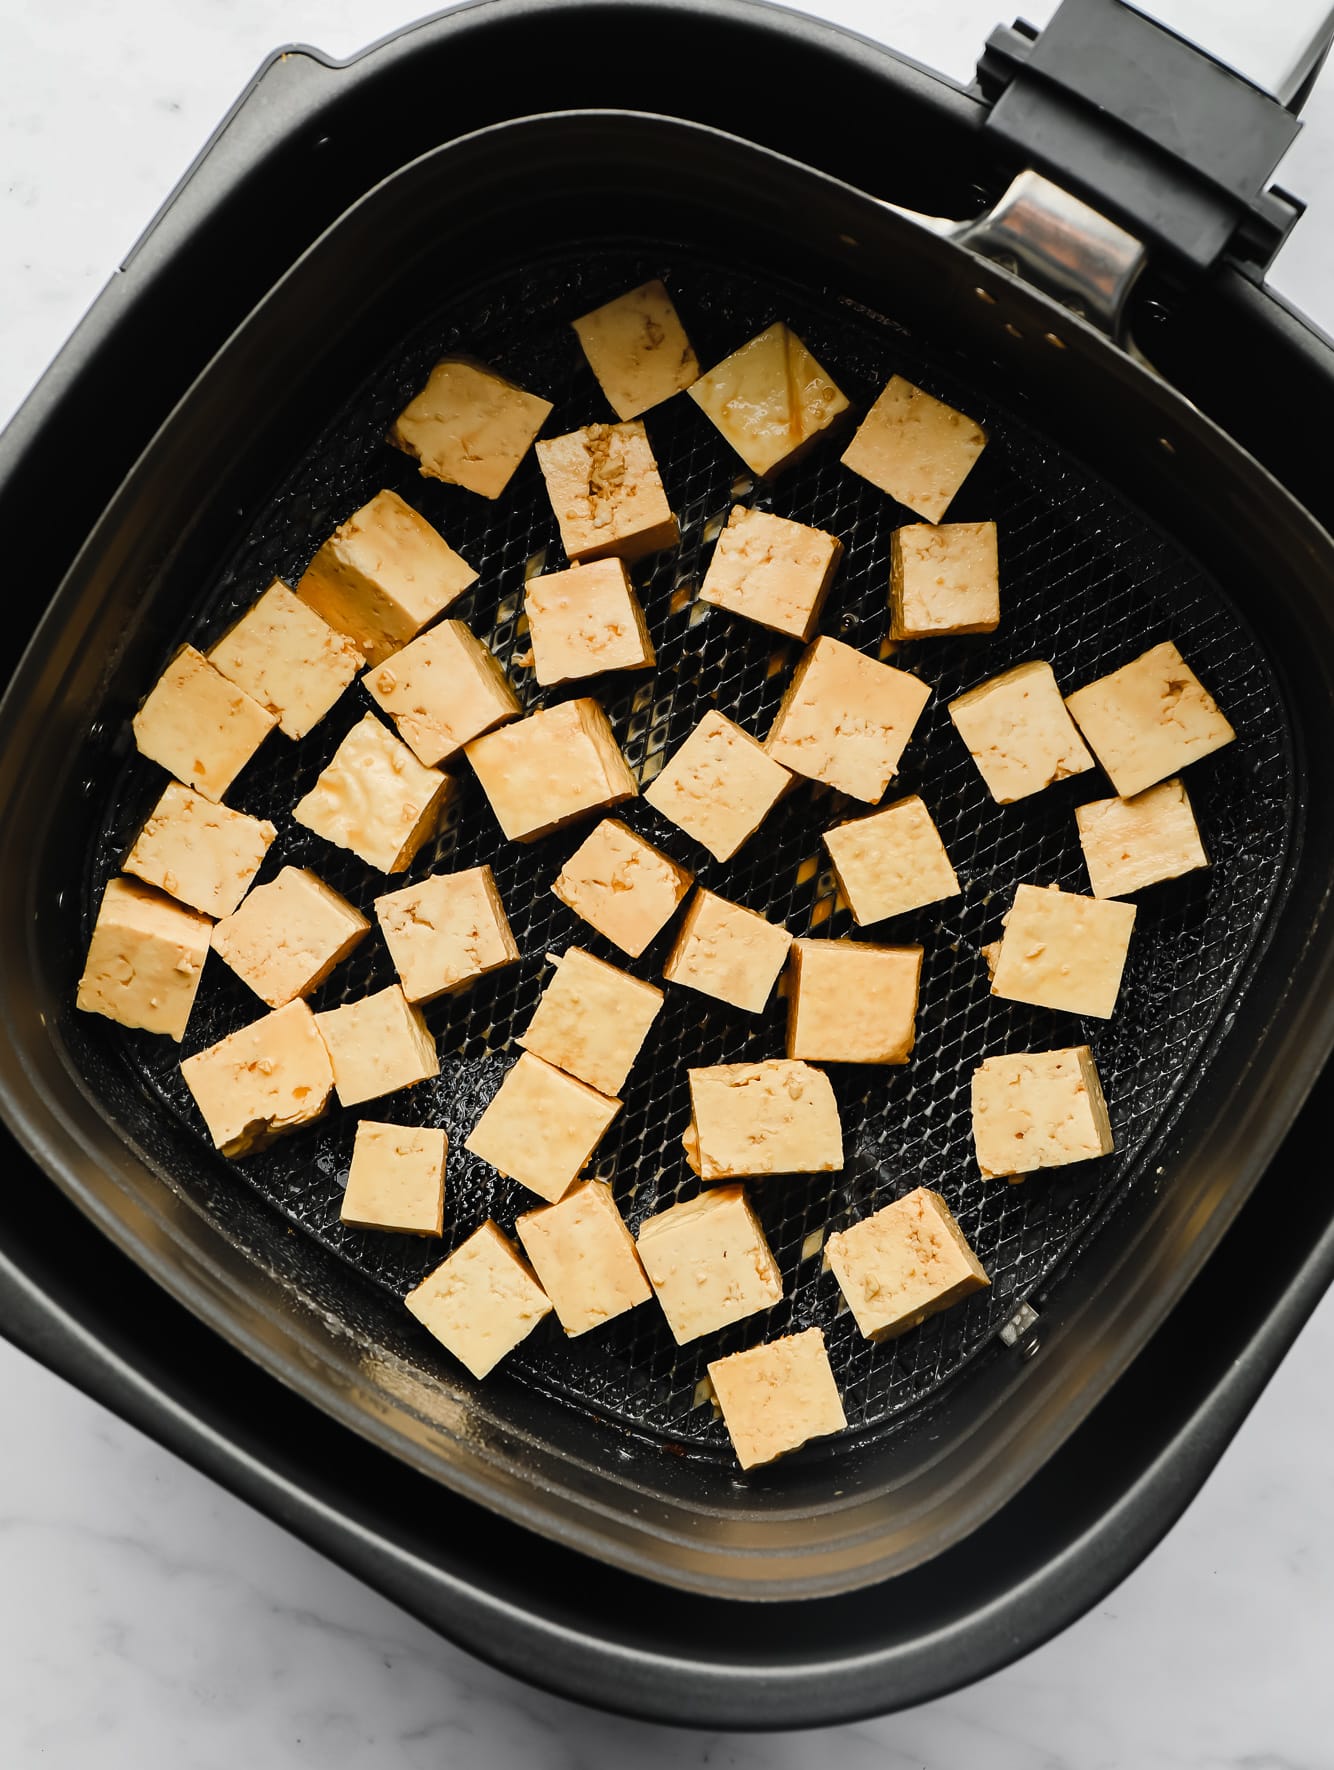 raw tofu cubes in an air fryer basket.